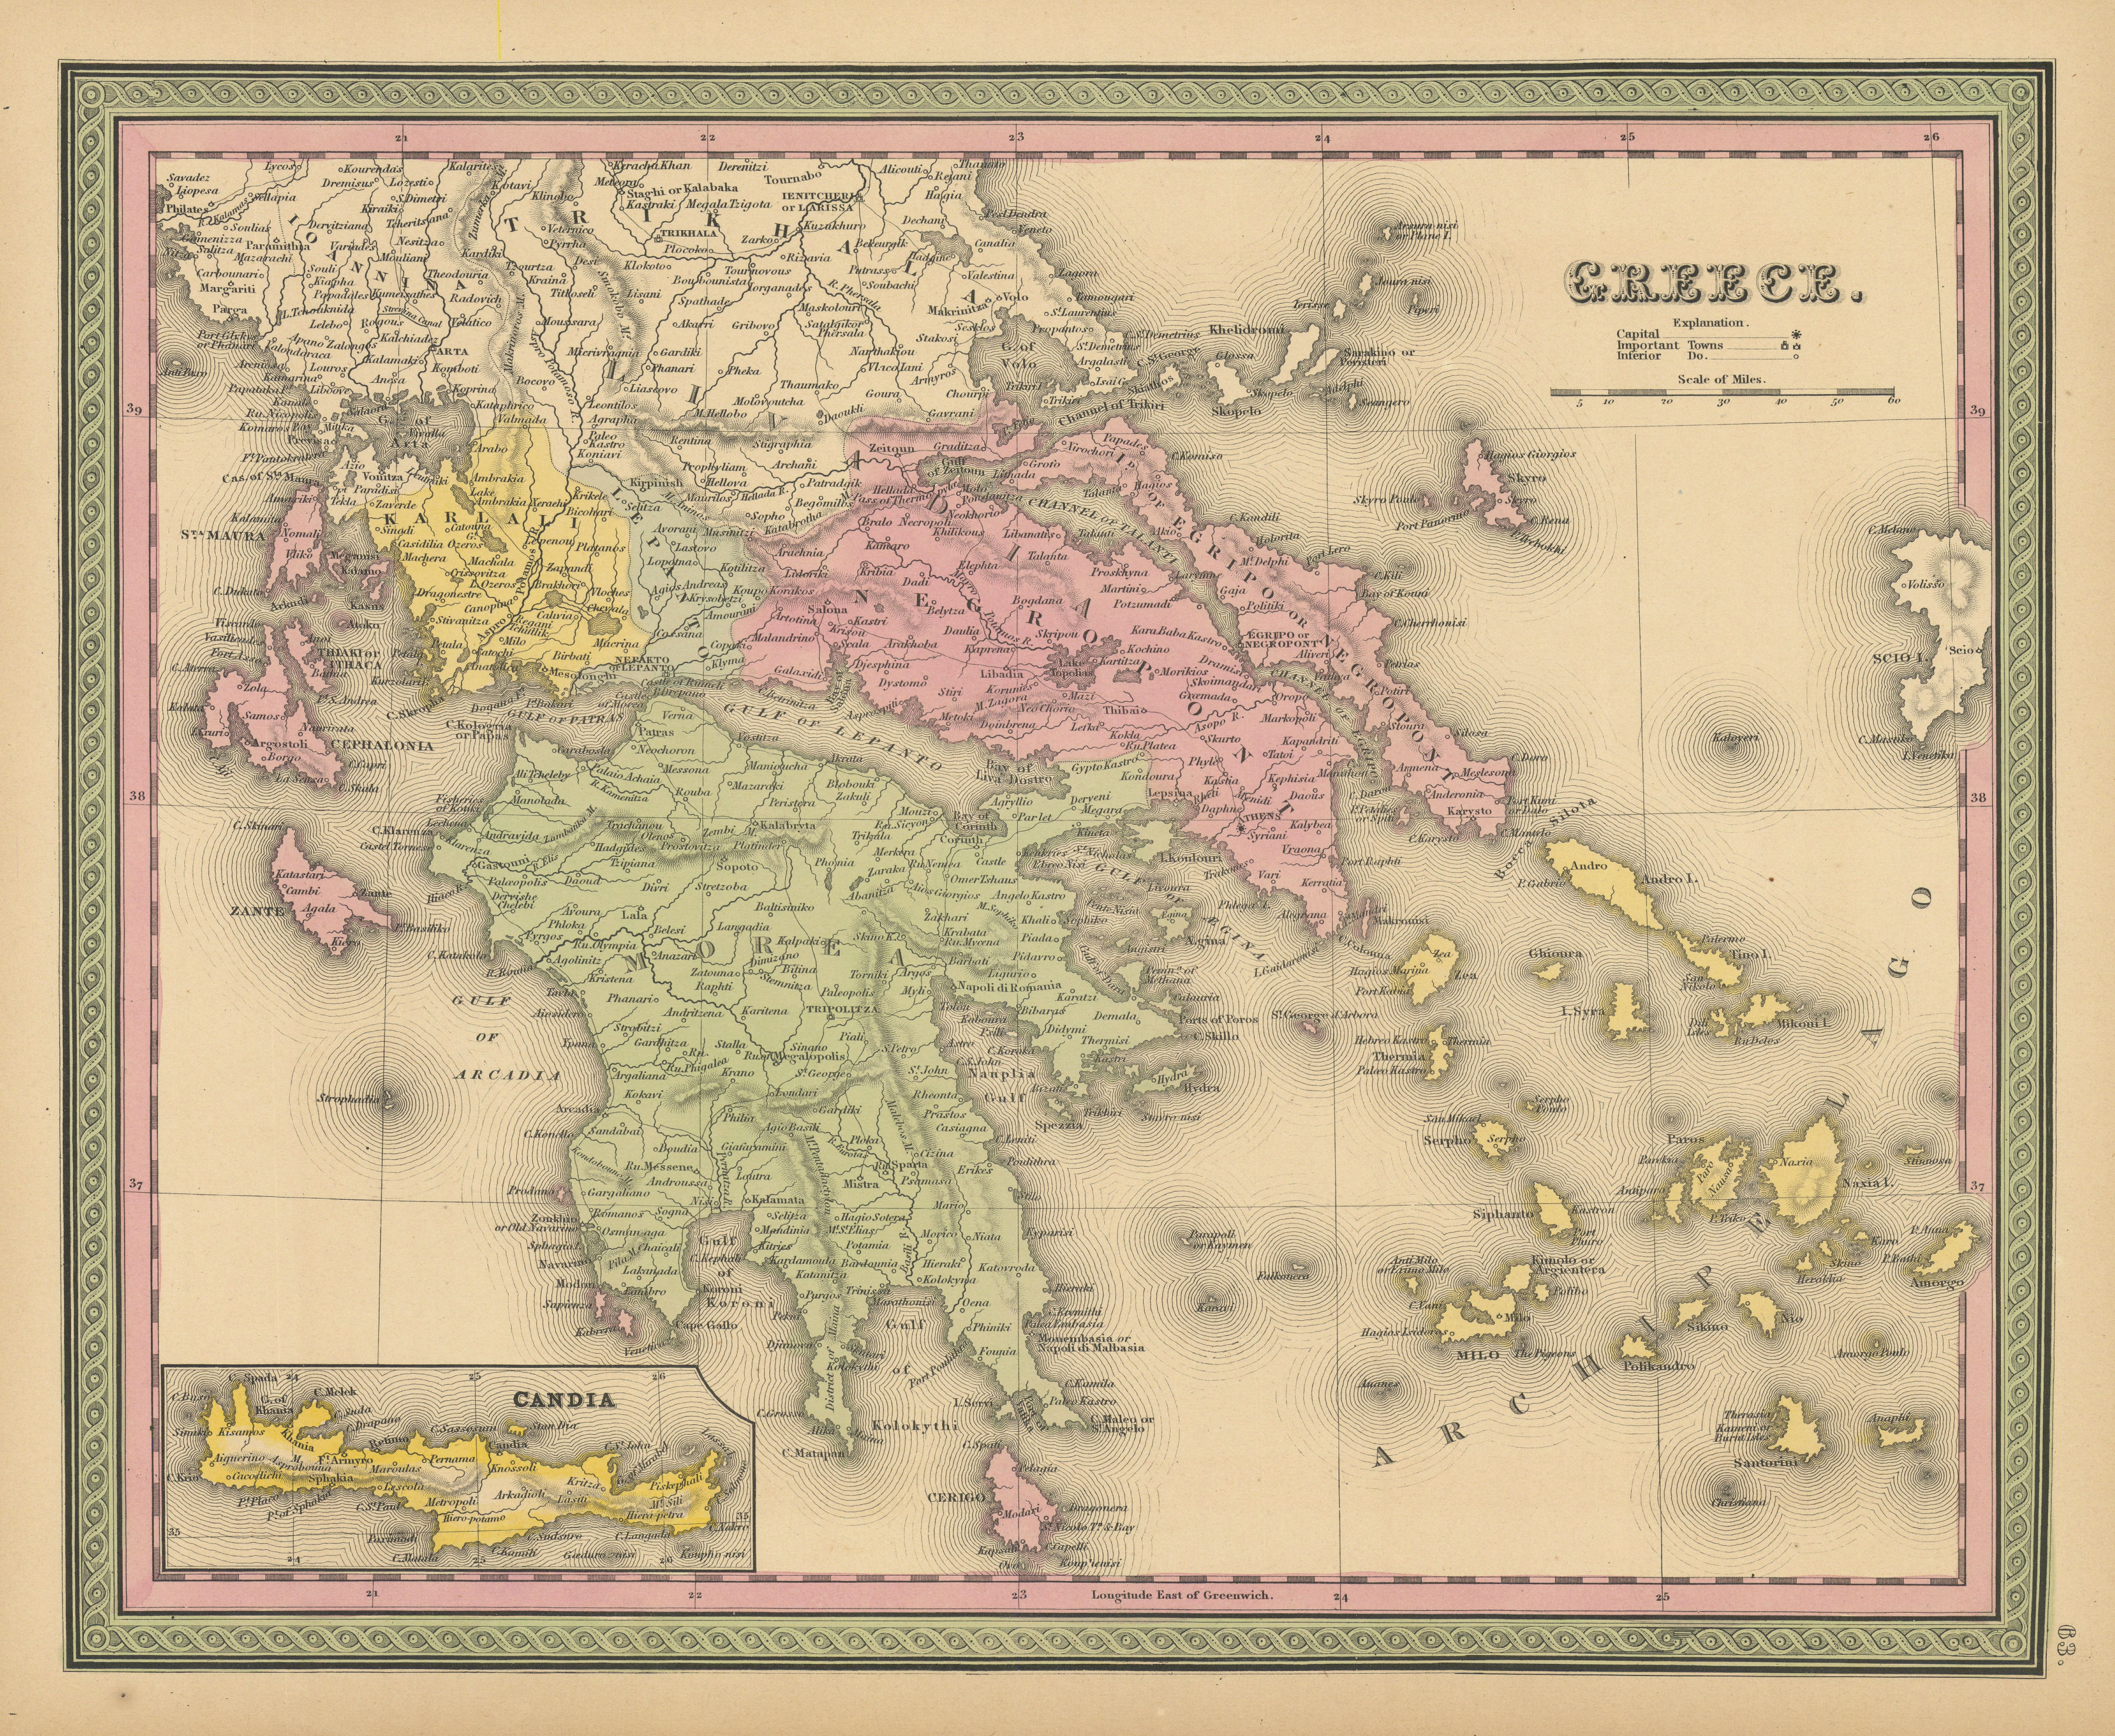 Associate Product Greece. Ionian Cyclades Sporades islands. THOMAS, COWPERTHWAIT 1852 old map